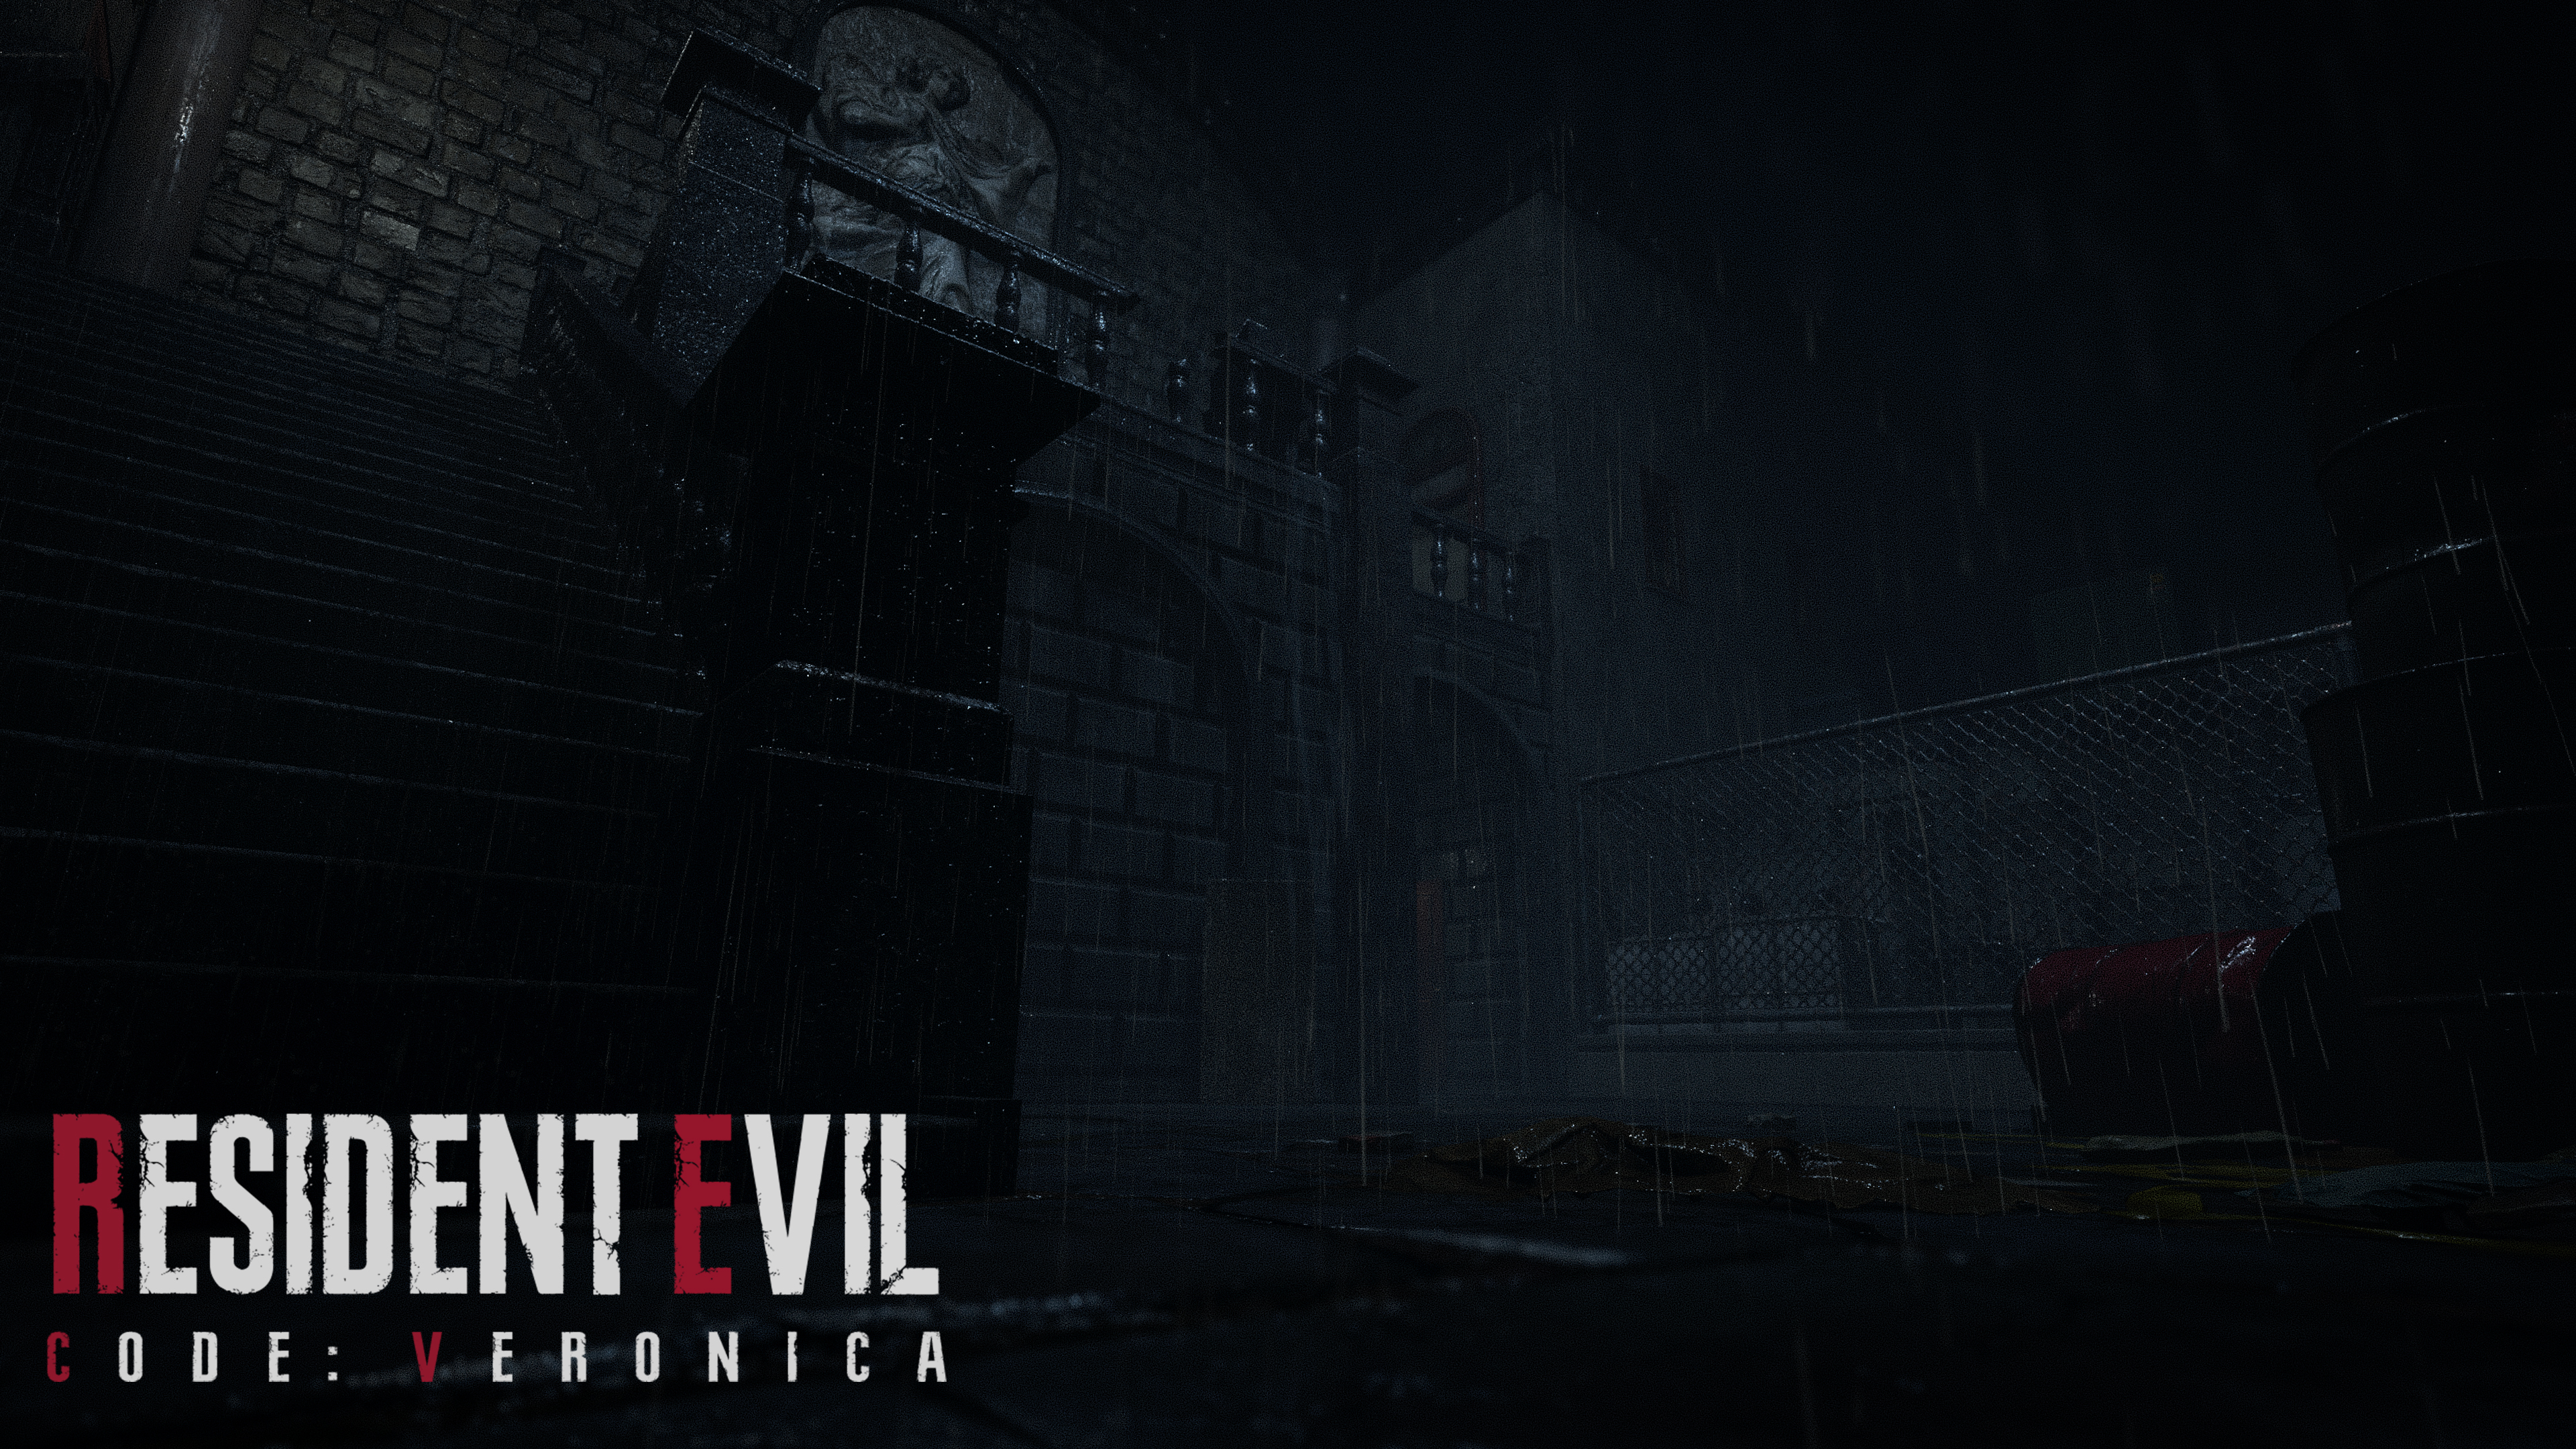 Resident evil 4 Remake Wallpaper 4k by mattcroft008 on DeviantArt